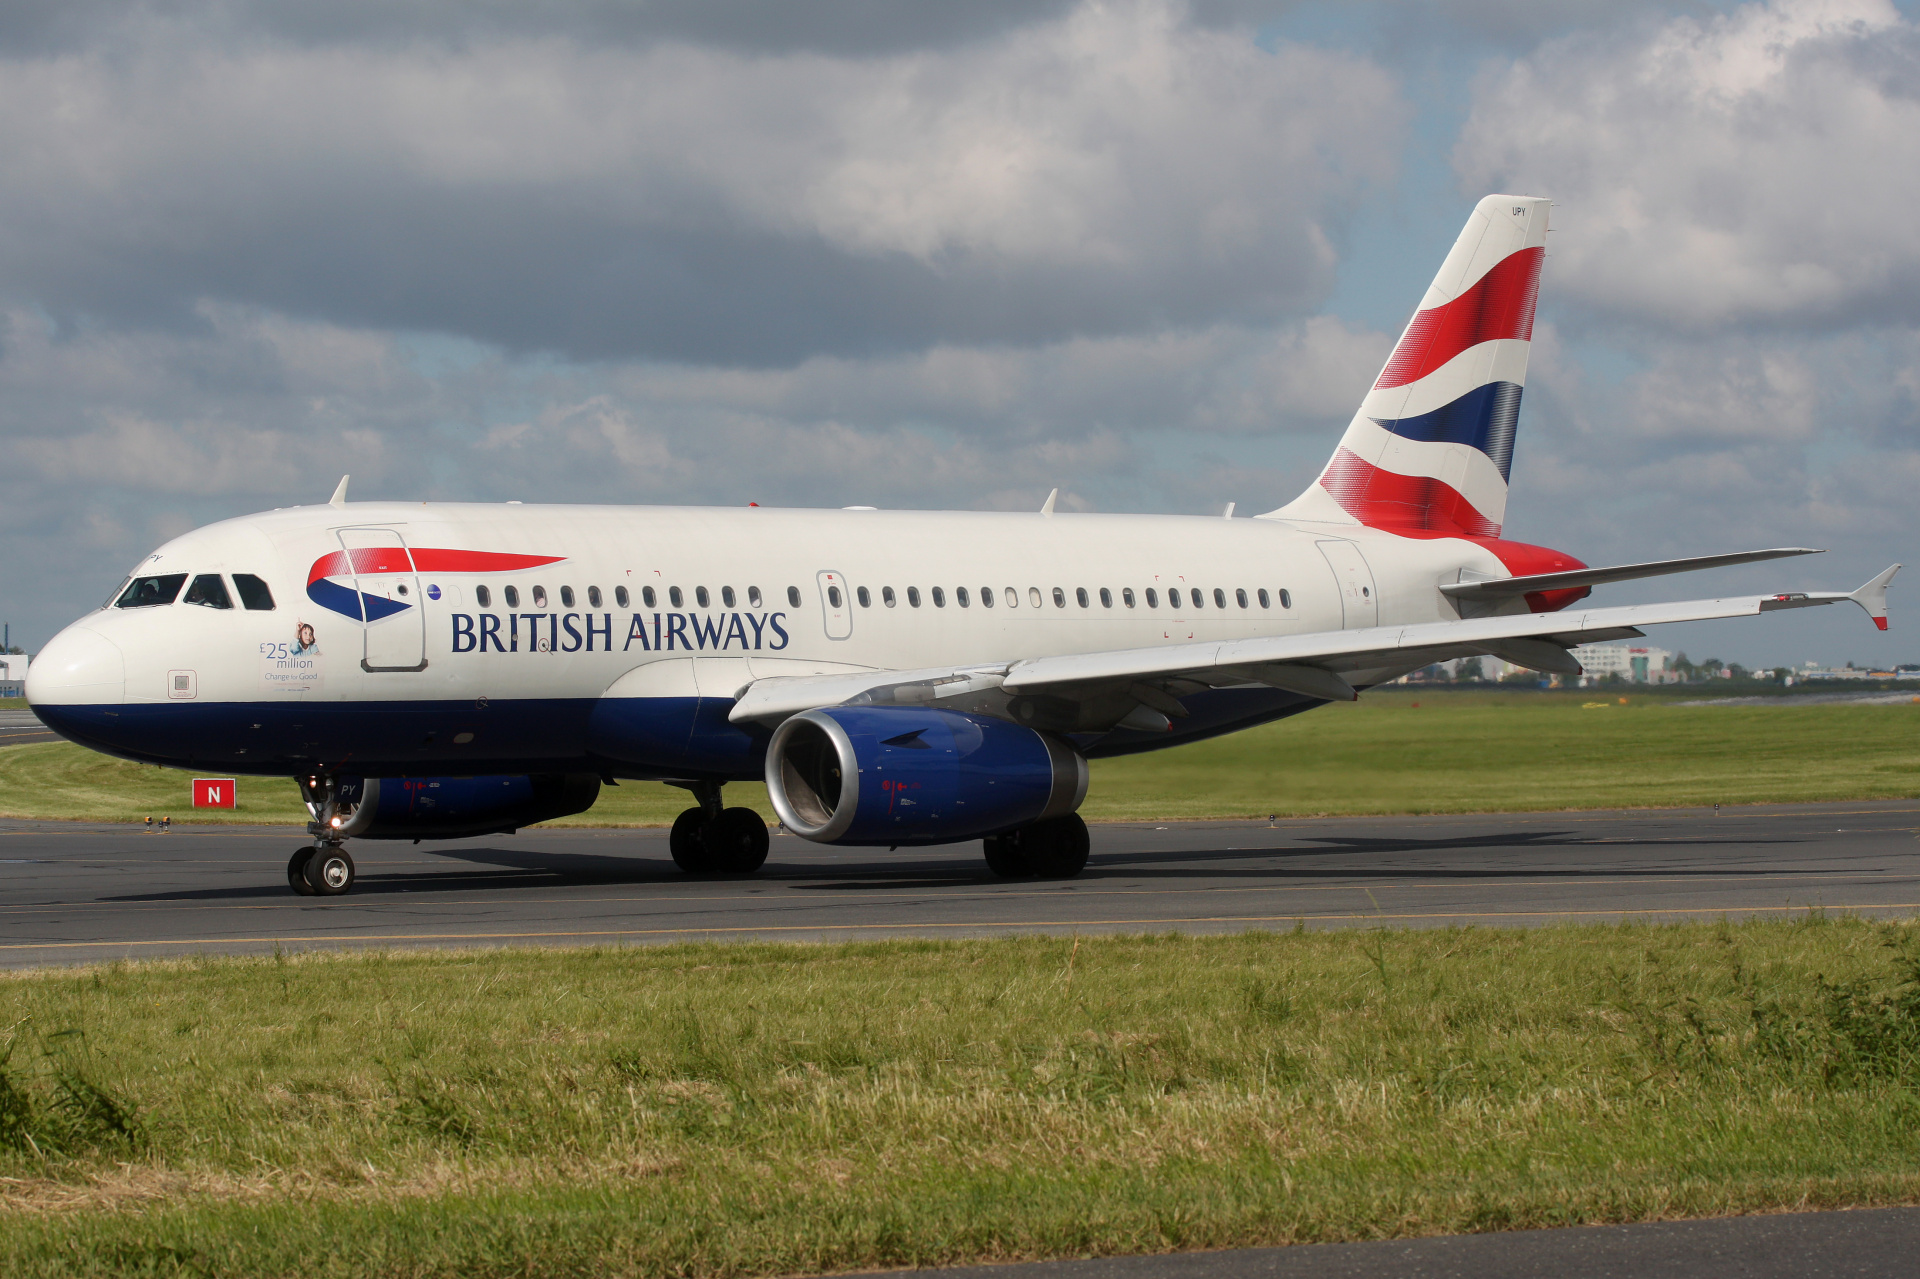 G-EUPY (25 million £. Change for Good sticker) (Aircraft » EPWA Spotting » Airbus A319-100 » British Airways)